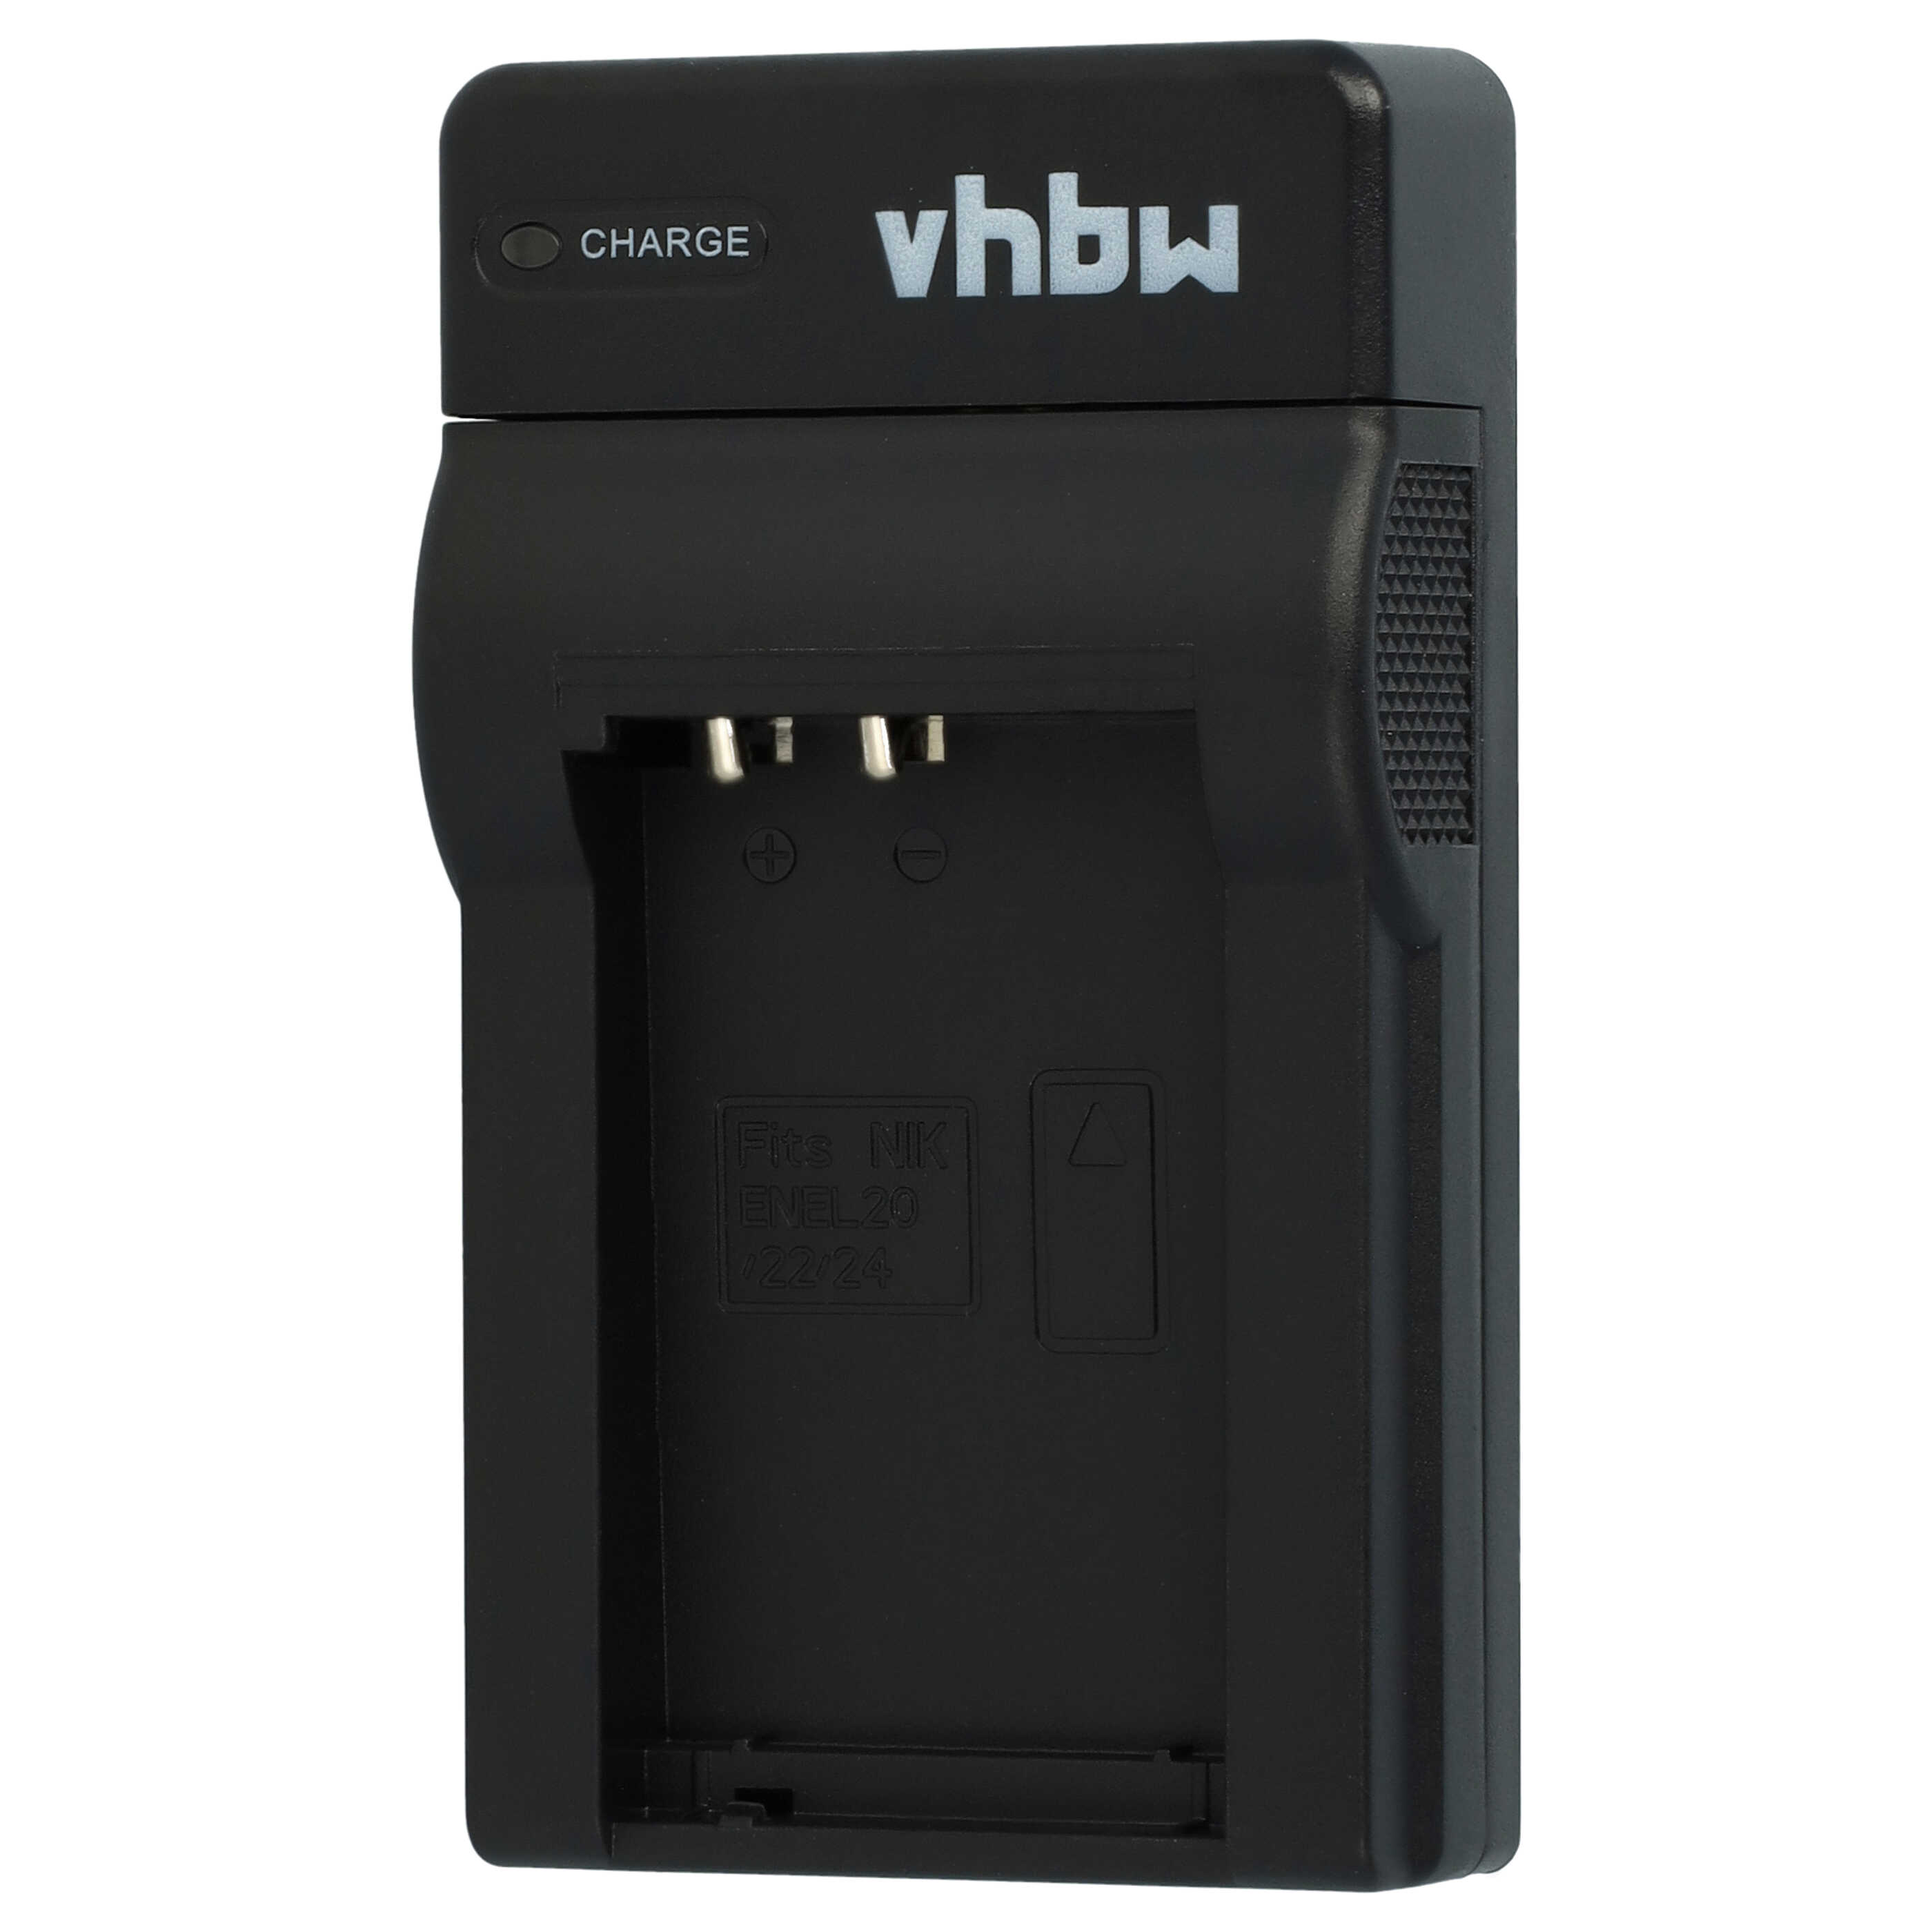 Battery Charger suitable for Pocket Cinema Camera Camera etc. - 0.5 A, 8.4 V